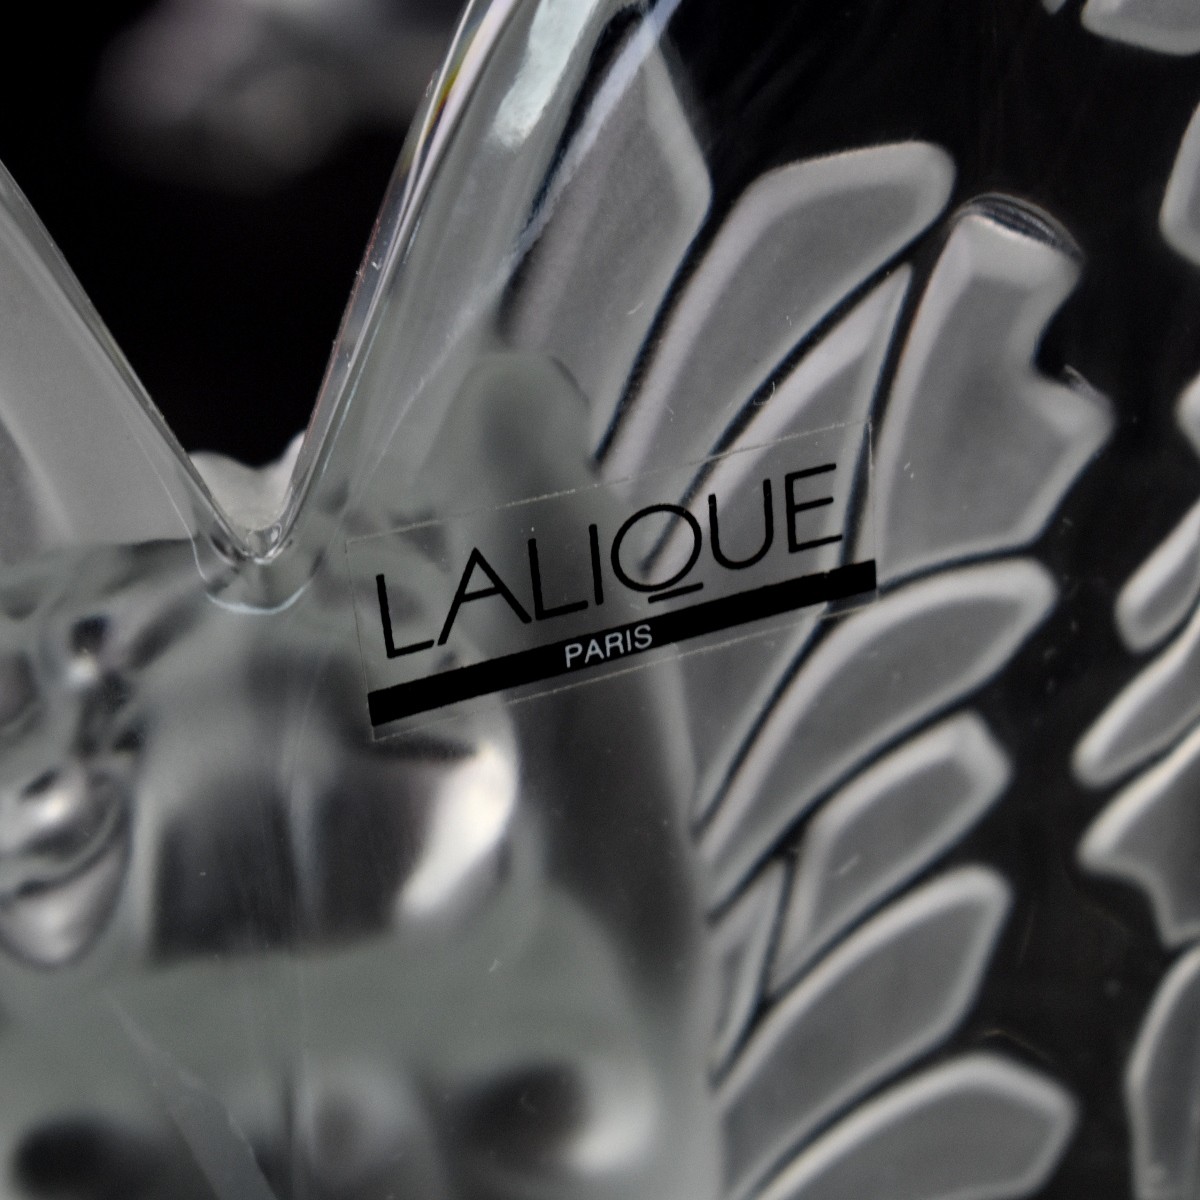 Lalique "Chrysalide" Vase